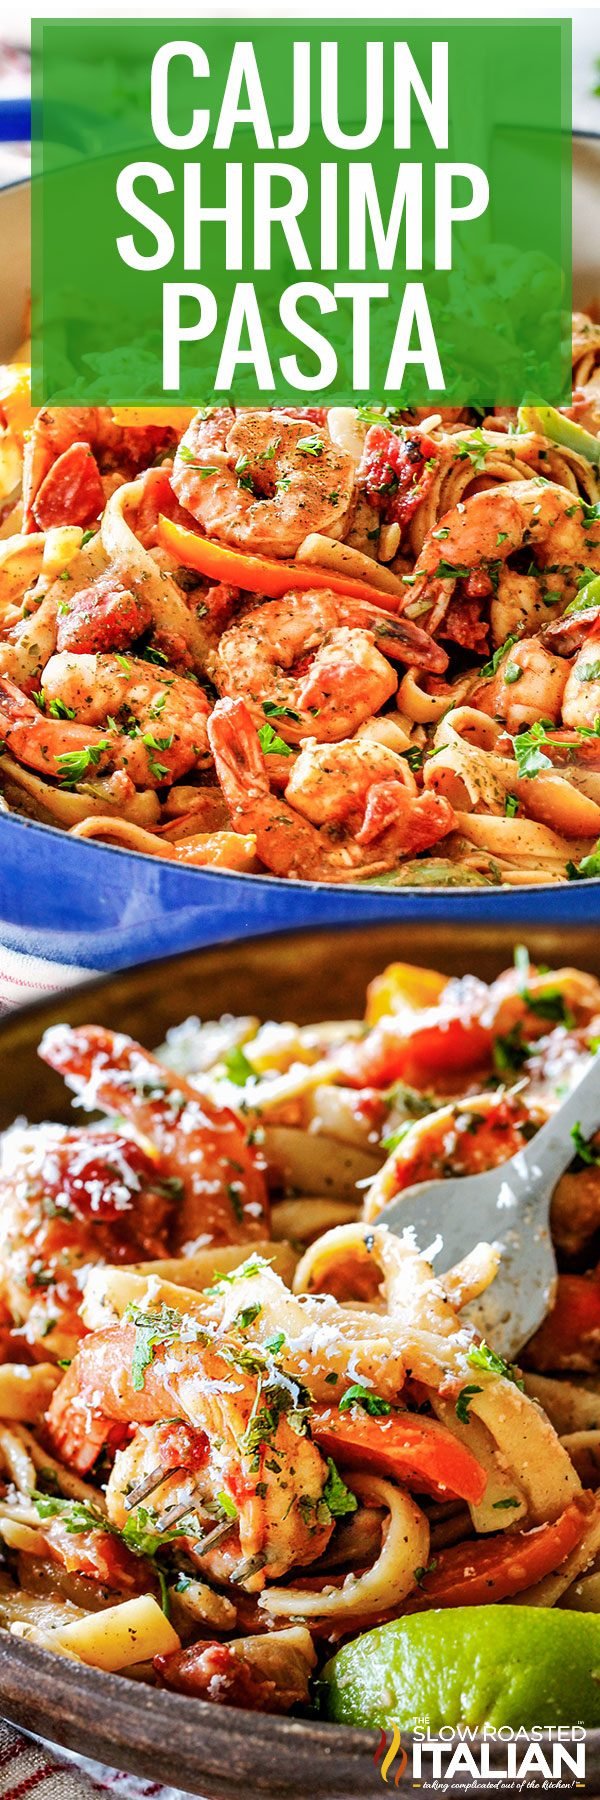 titled image (and shown): cajun shrimp pasta